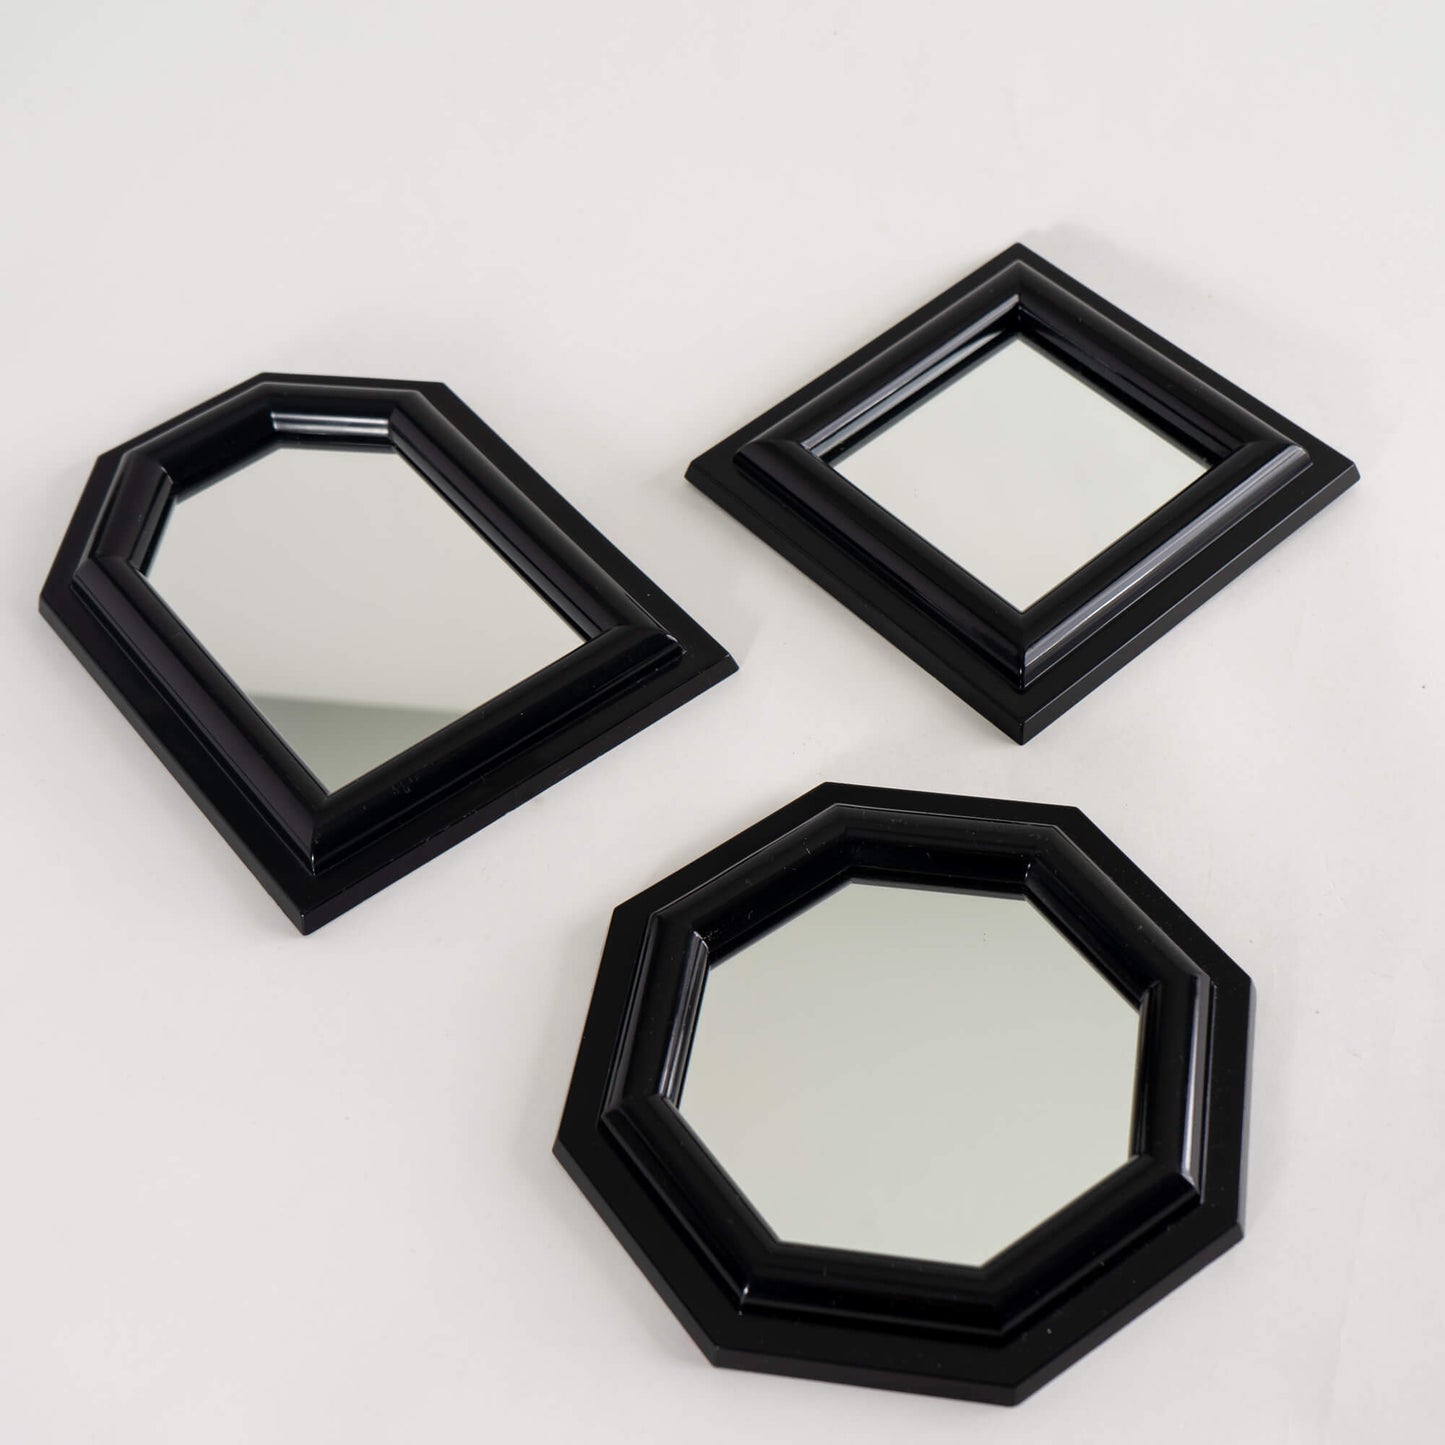 Vintage Black Wall Mirrors - Set of 3